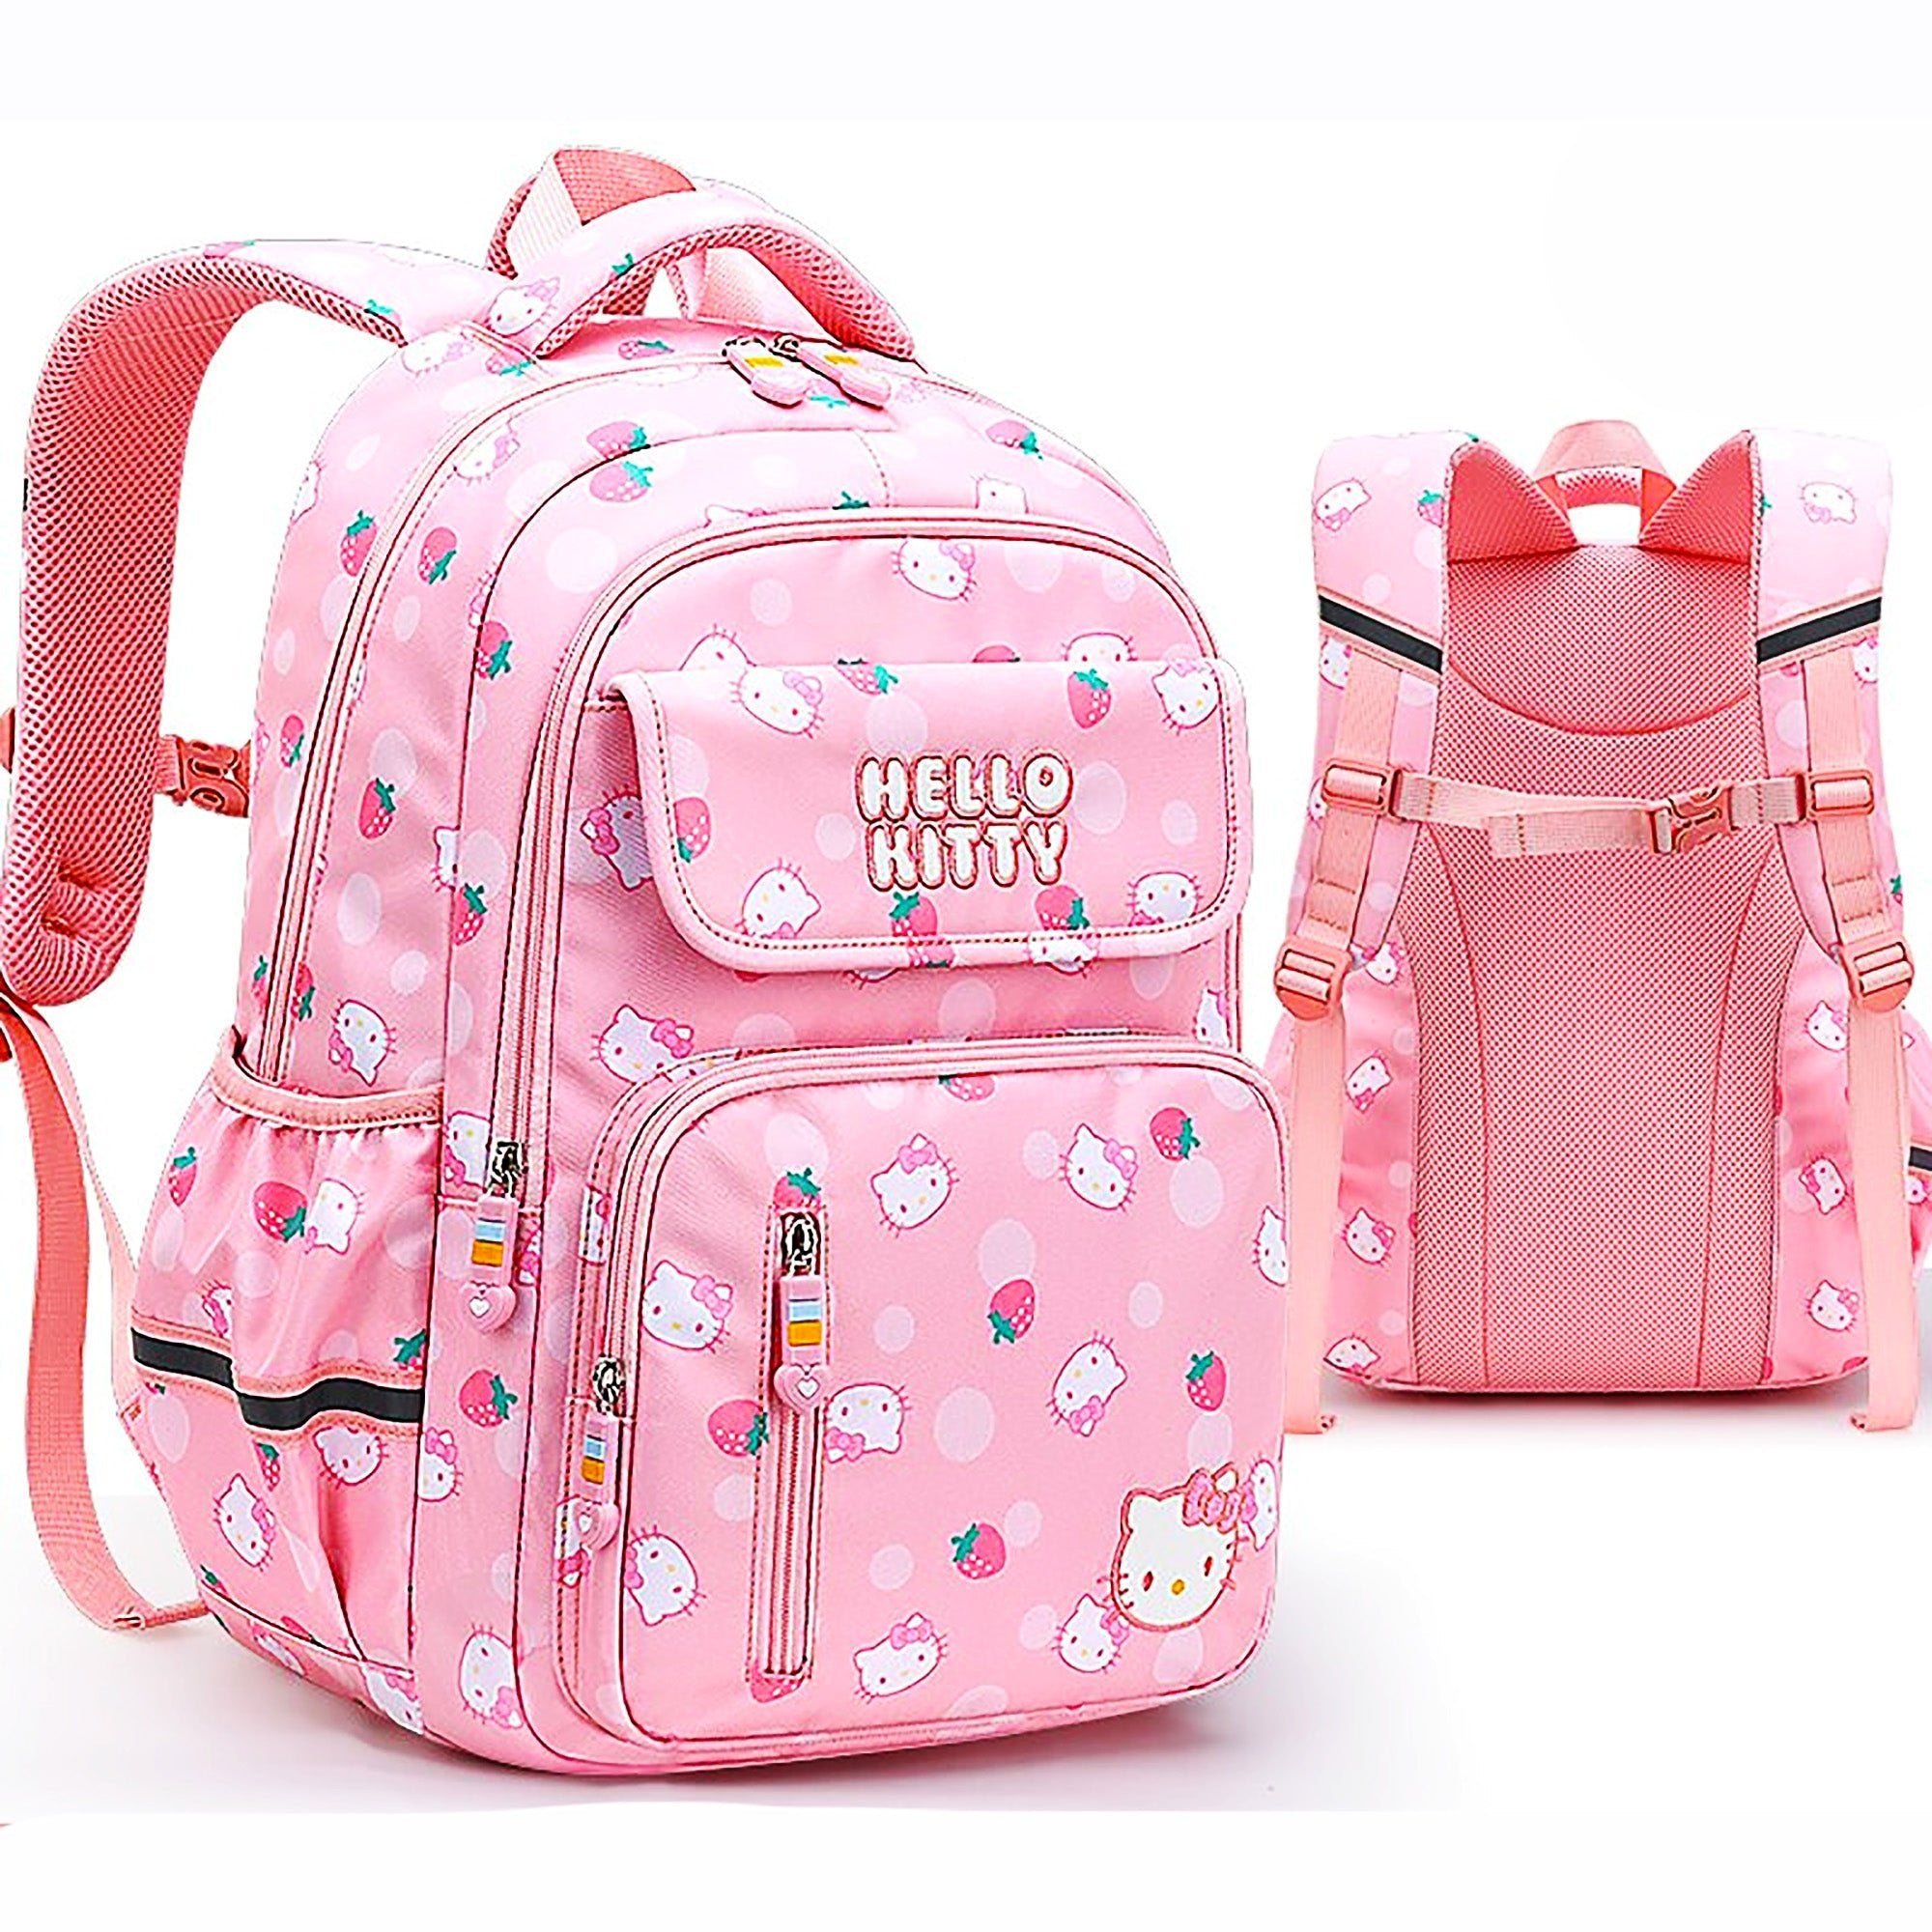 Mother garden strawberry Backpack School Girl kawaii pink used